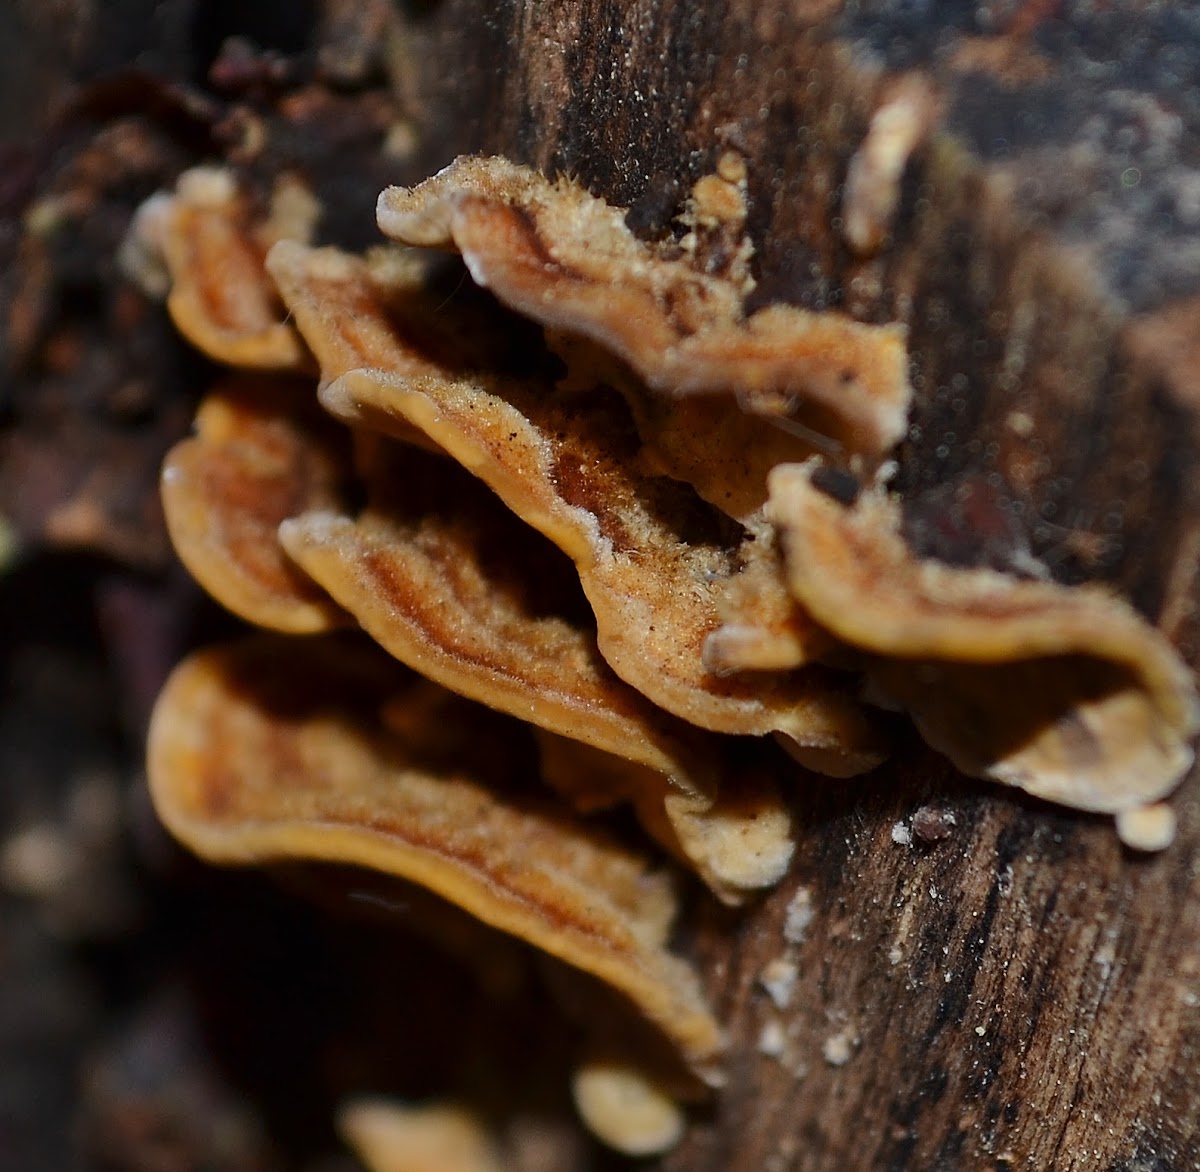 Crust Fungus